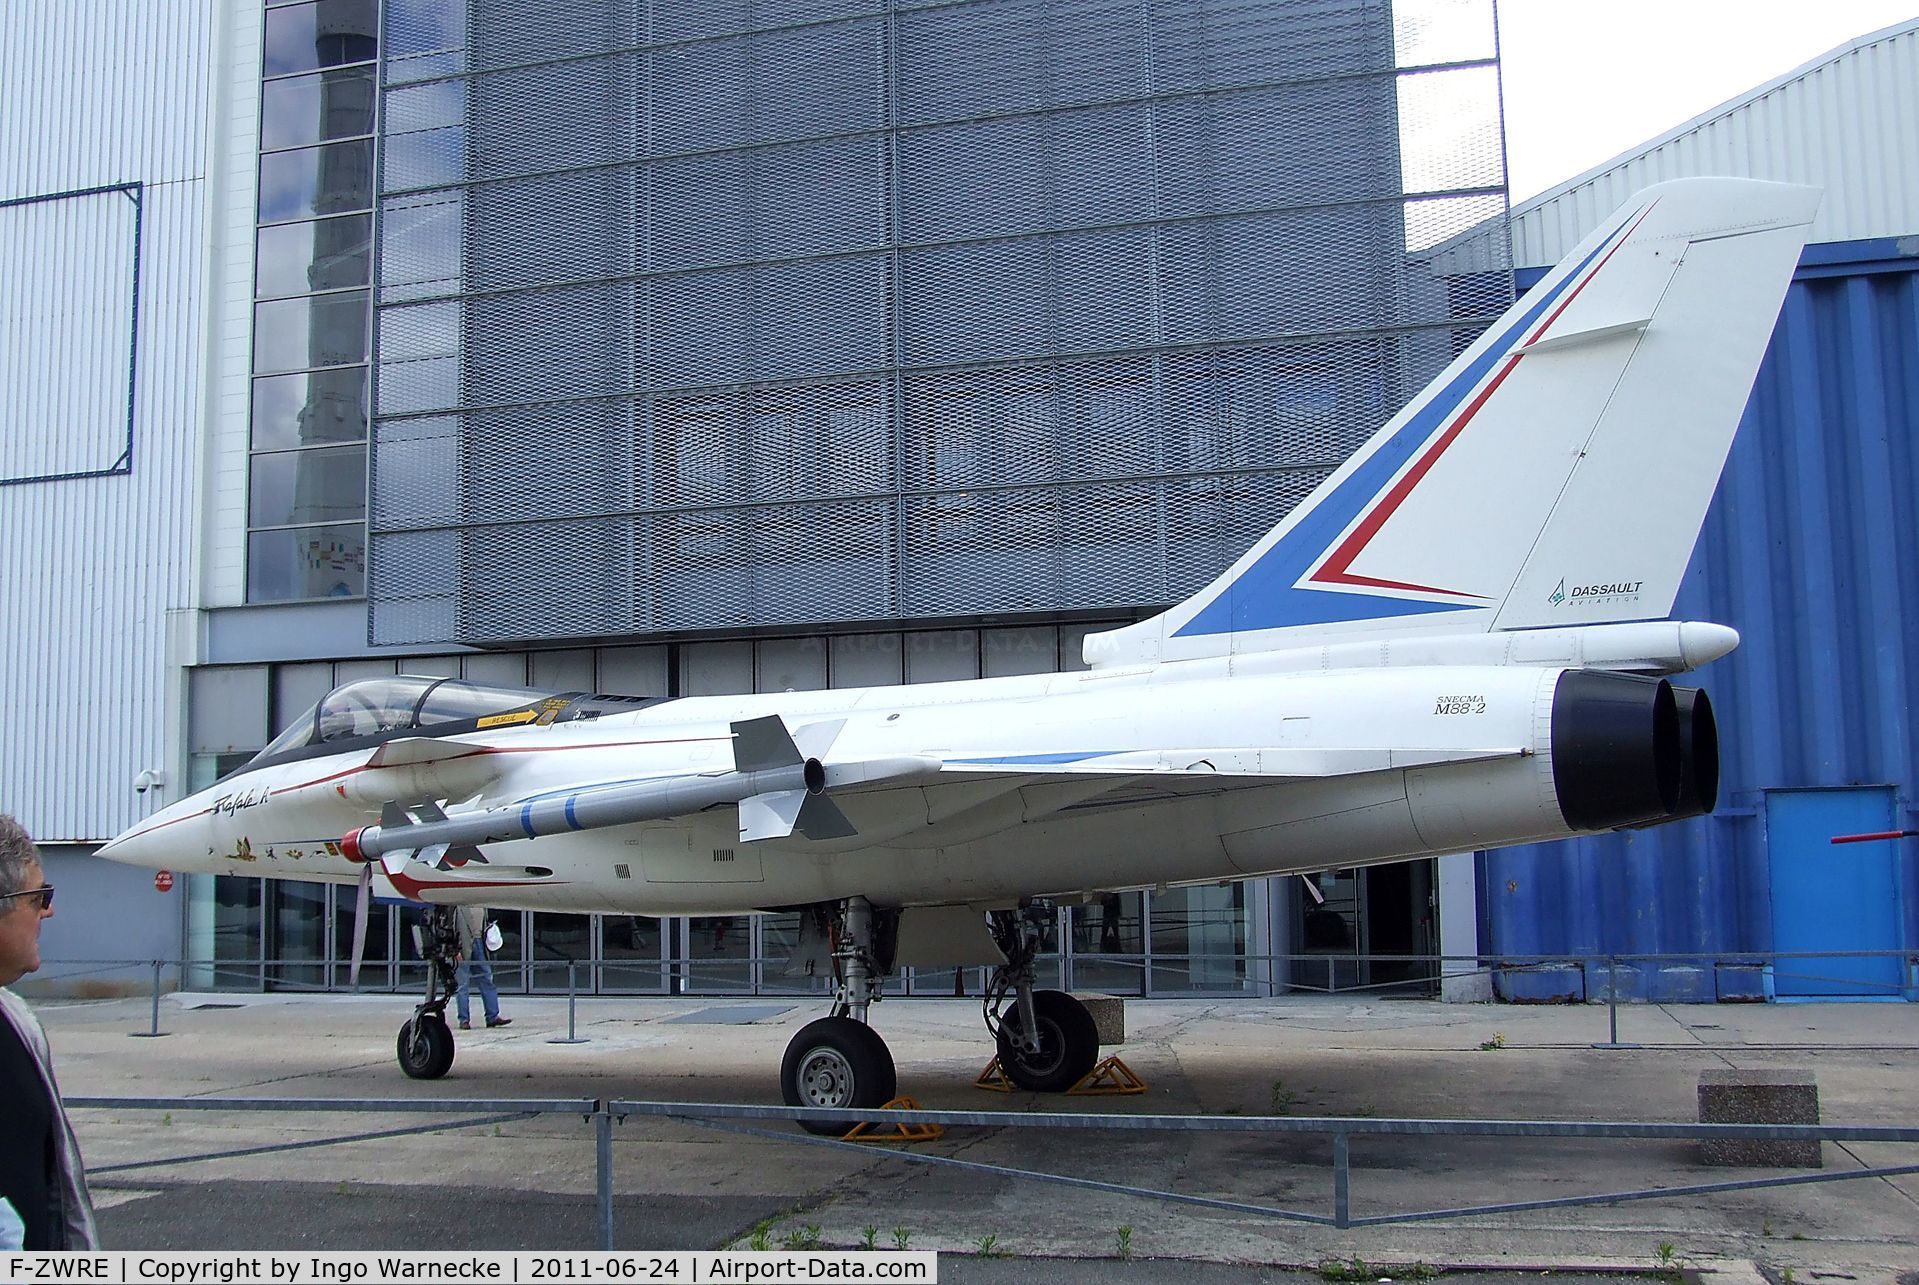 F-ZWRE, 1986 Dassault Rafale A C/N 01, Dassault Rafale A prototype at the Musee de l'Air, Paris/Le Bourget